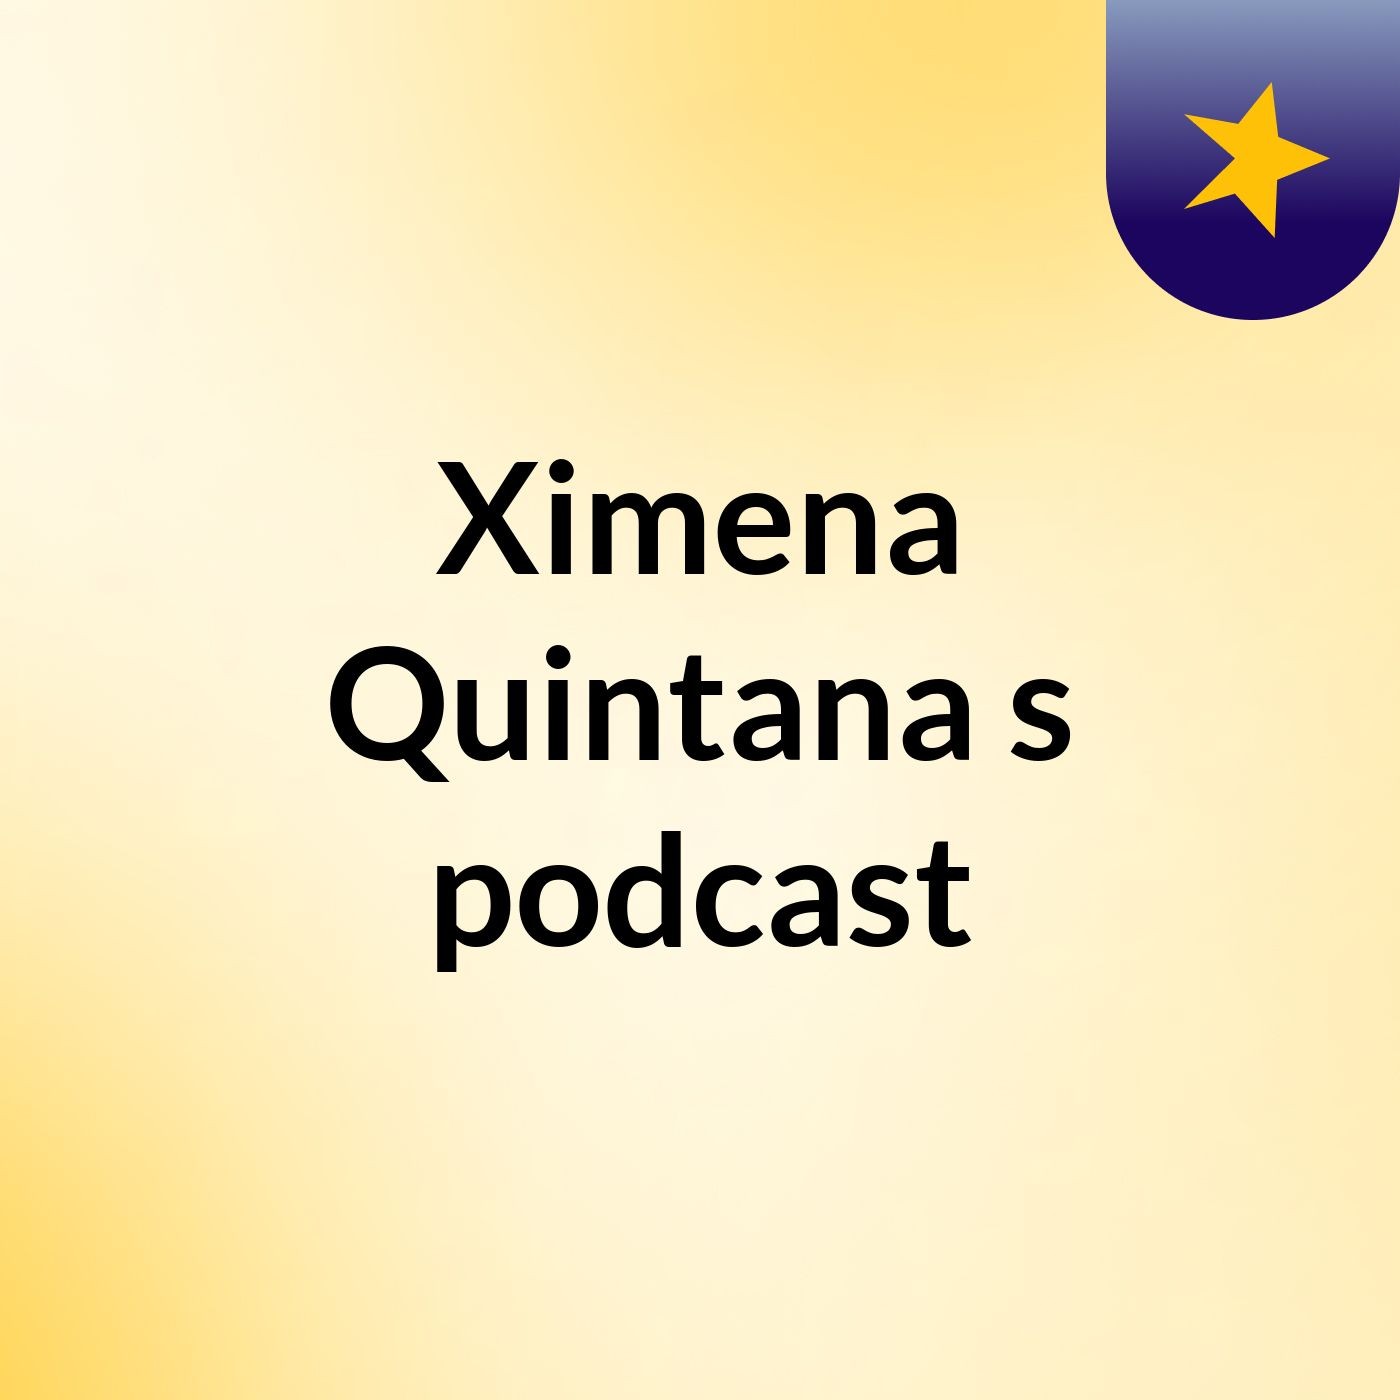 Ximena Quintana's podcast